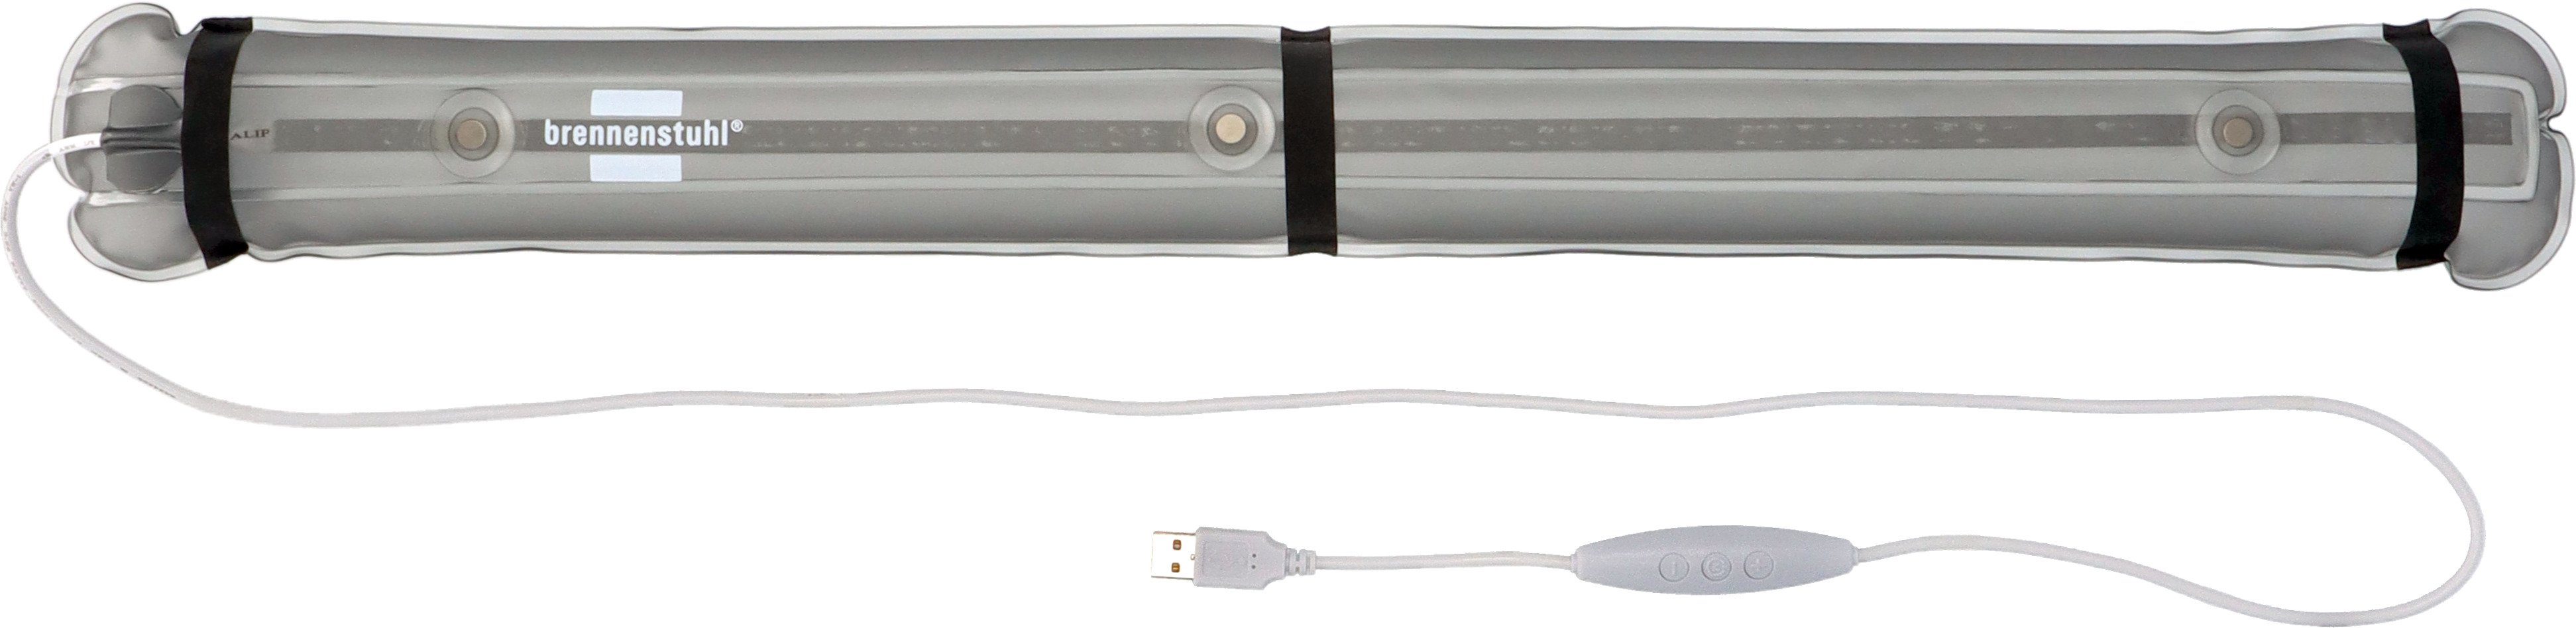 fest Air LED Kabel faltbare stufenlos aufblasbar, OLI Brennenstuhl LED Gartenleuchte dimmbar, mit integriert, Röhre USB 1, 1m LED